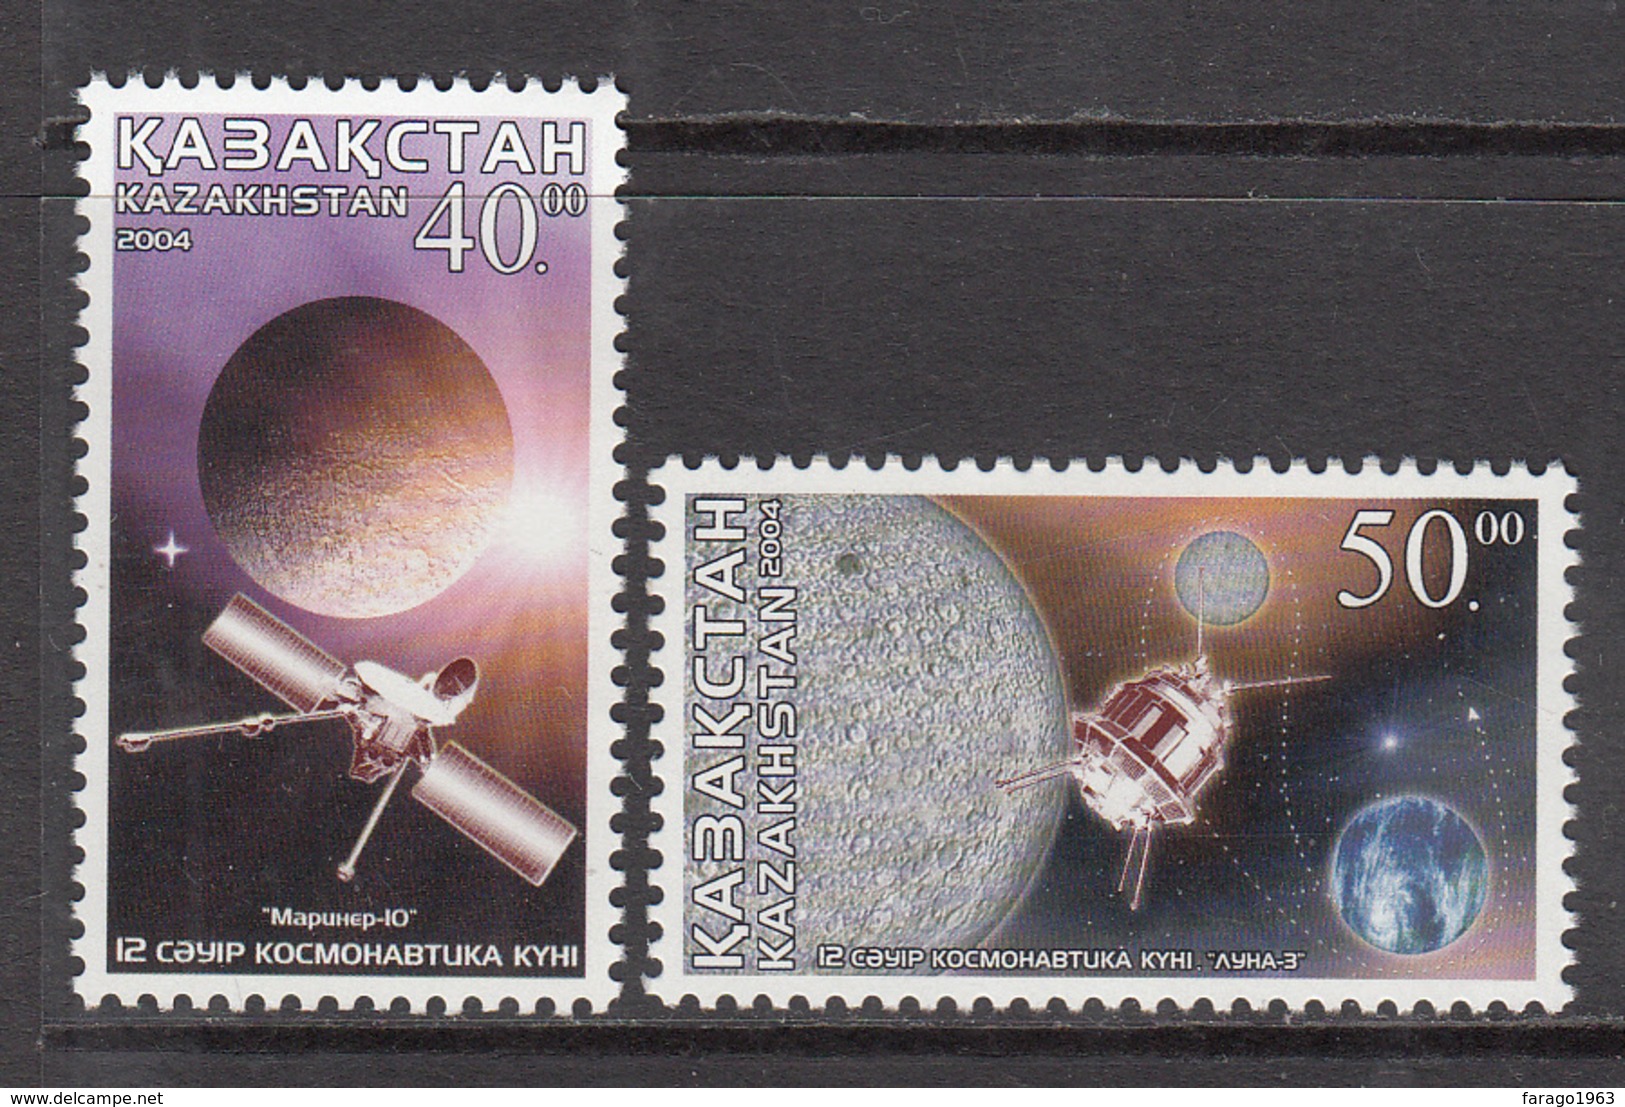 2004 Kazakhstan Space Cosmonauts Day Complete Set Of 2  Stamps   MNH - Kazakhstan